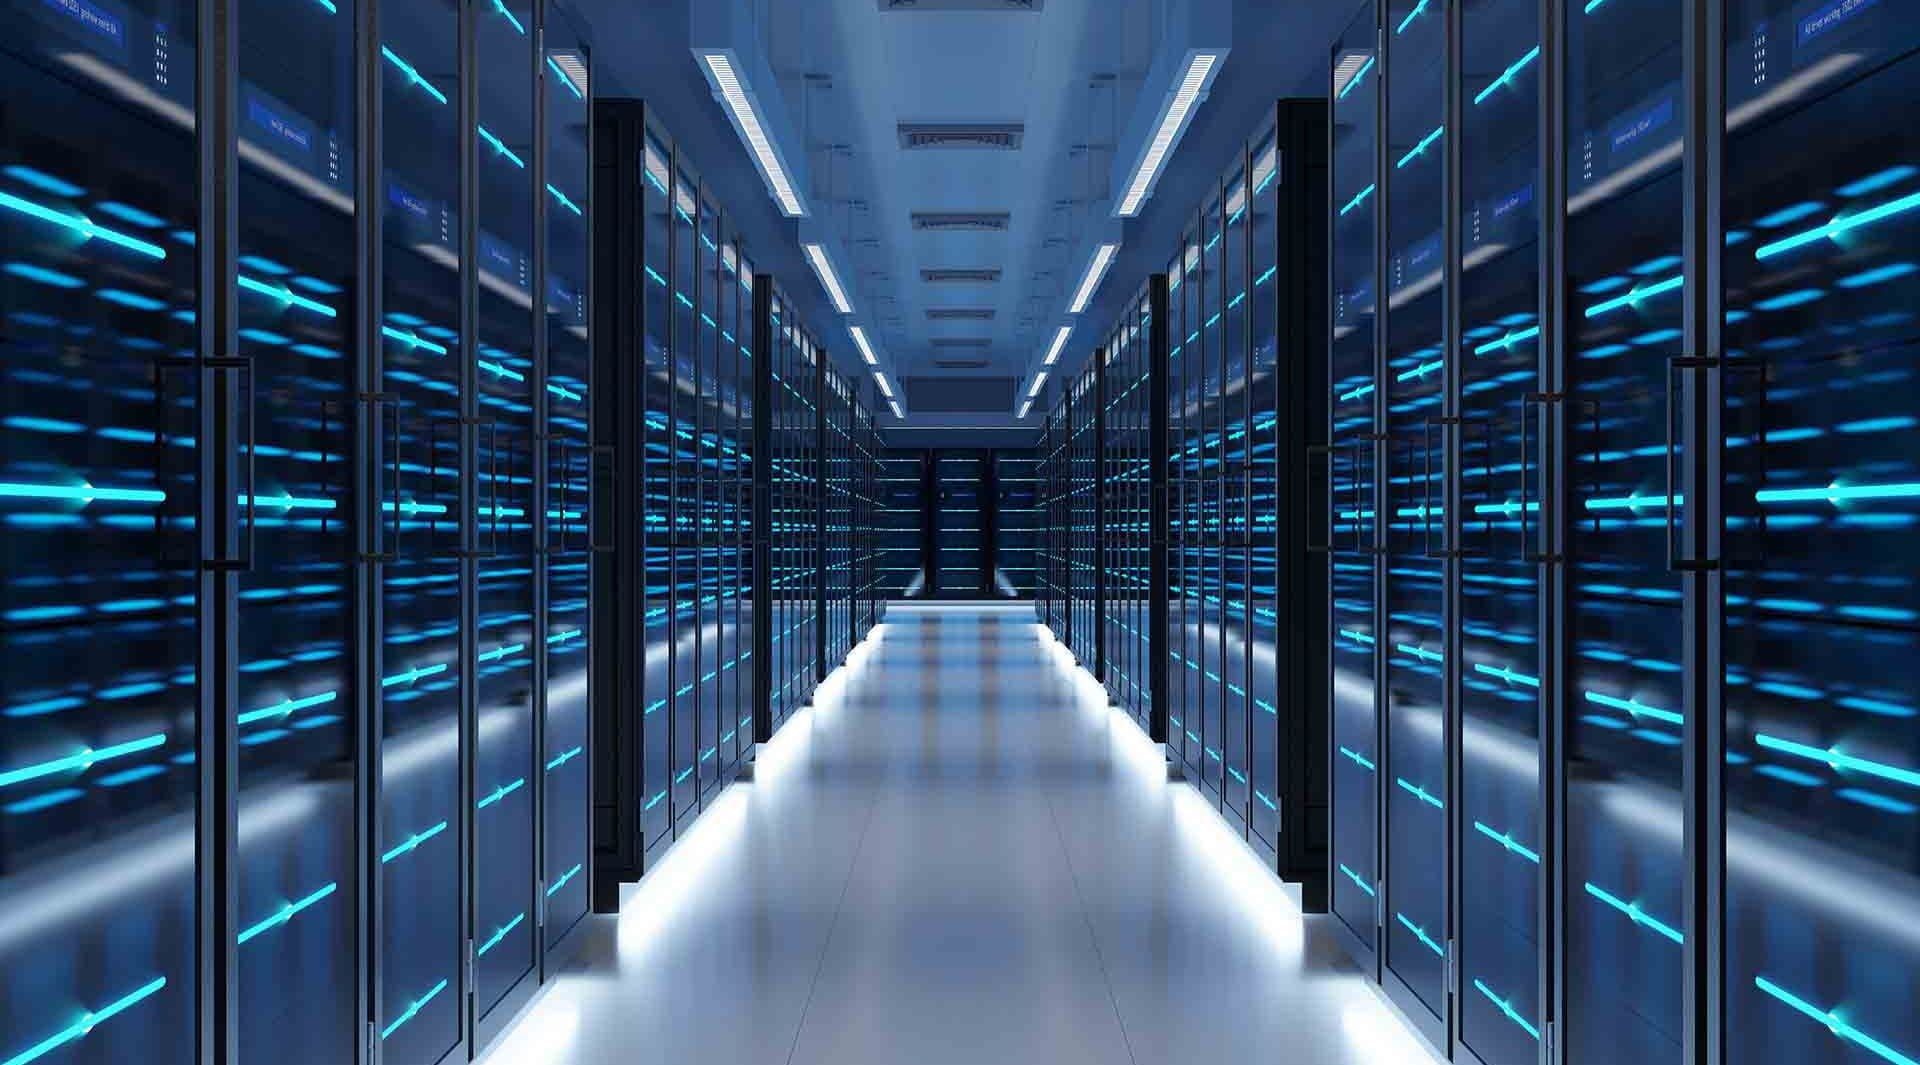 a long row of computer servers room blue lights behind glass doors